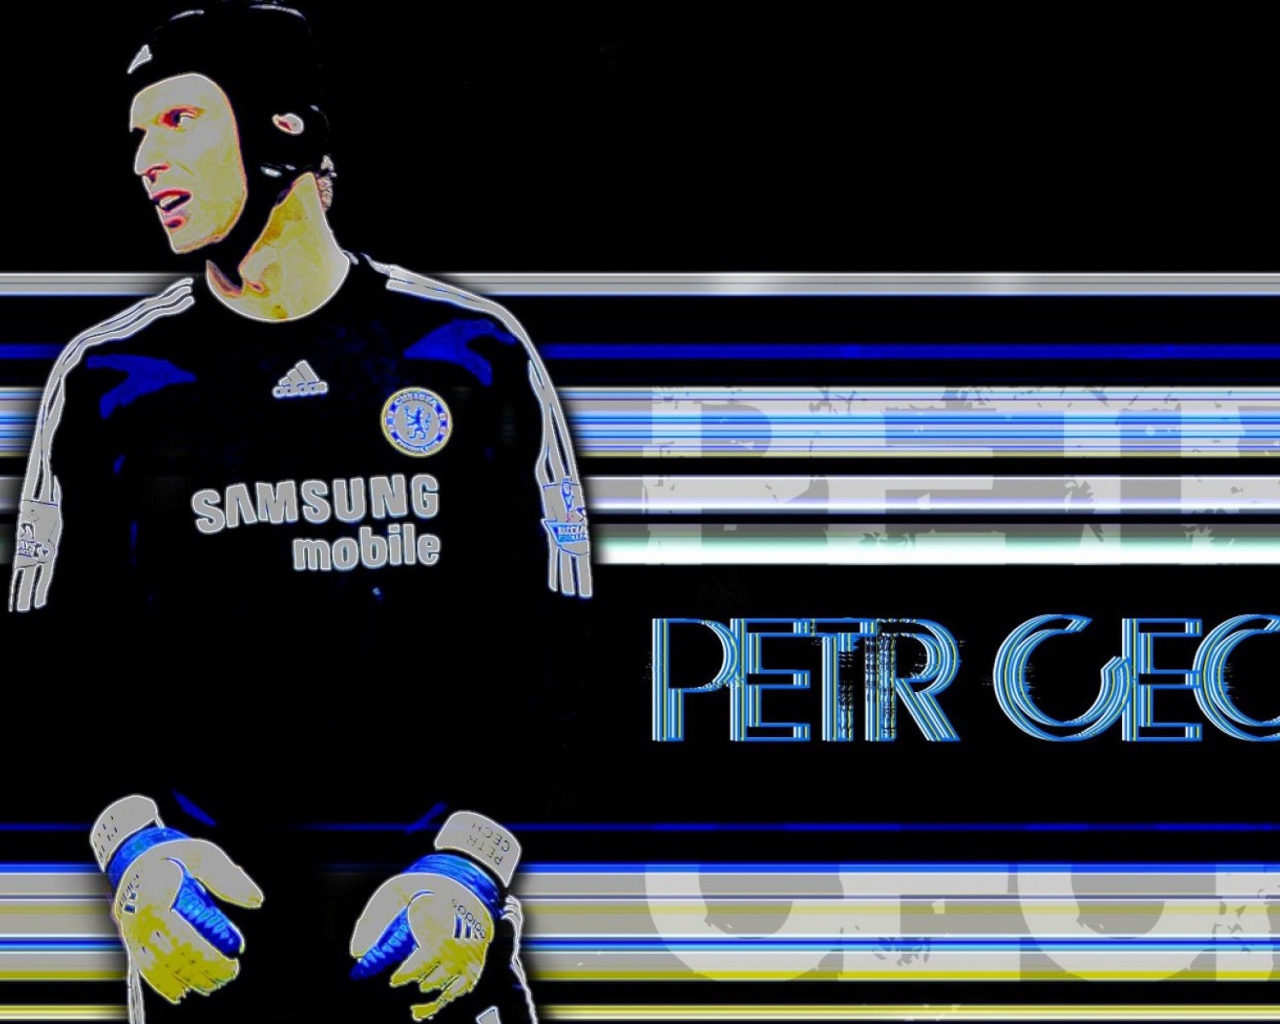 The best goalkeeper Chelsea Petr Cech